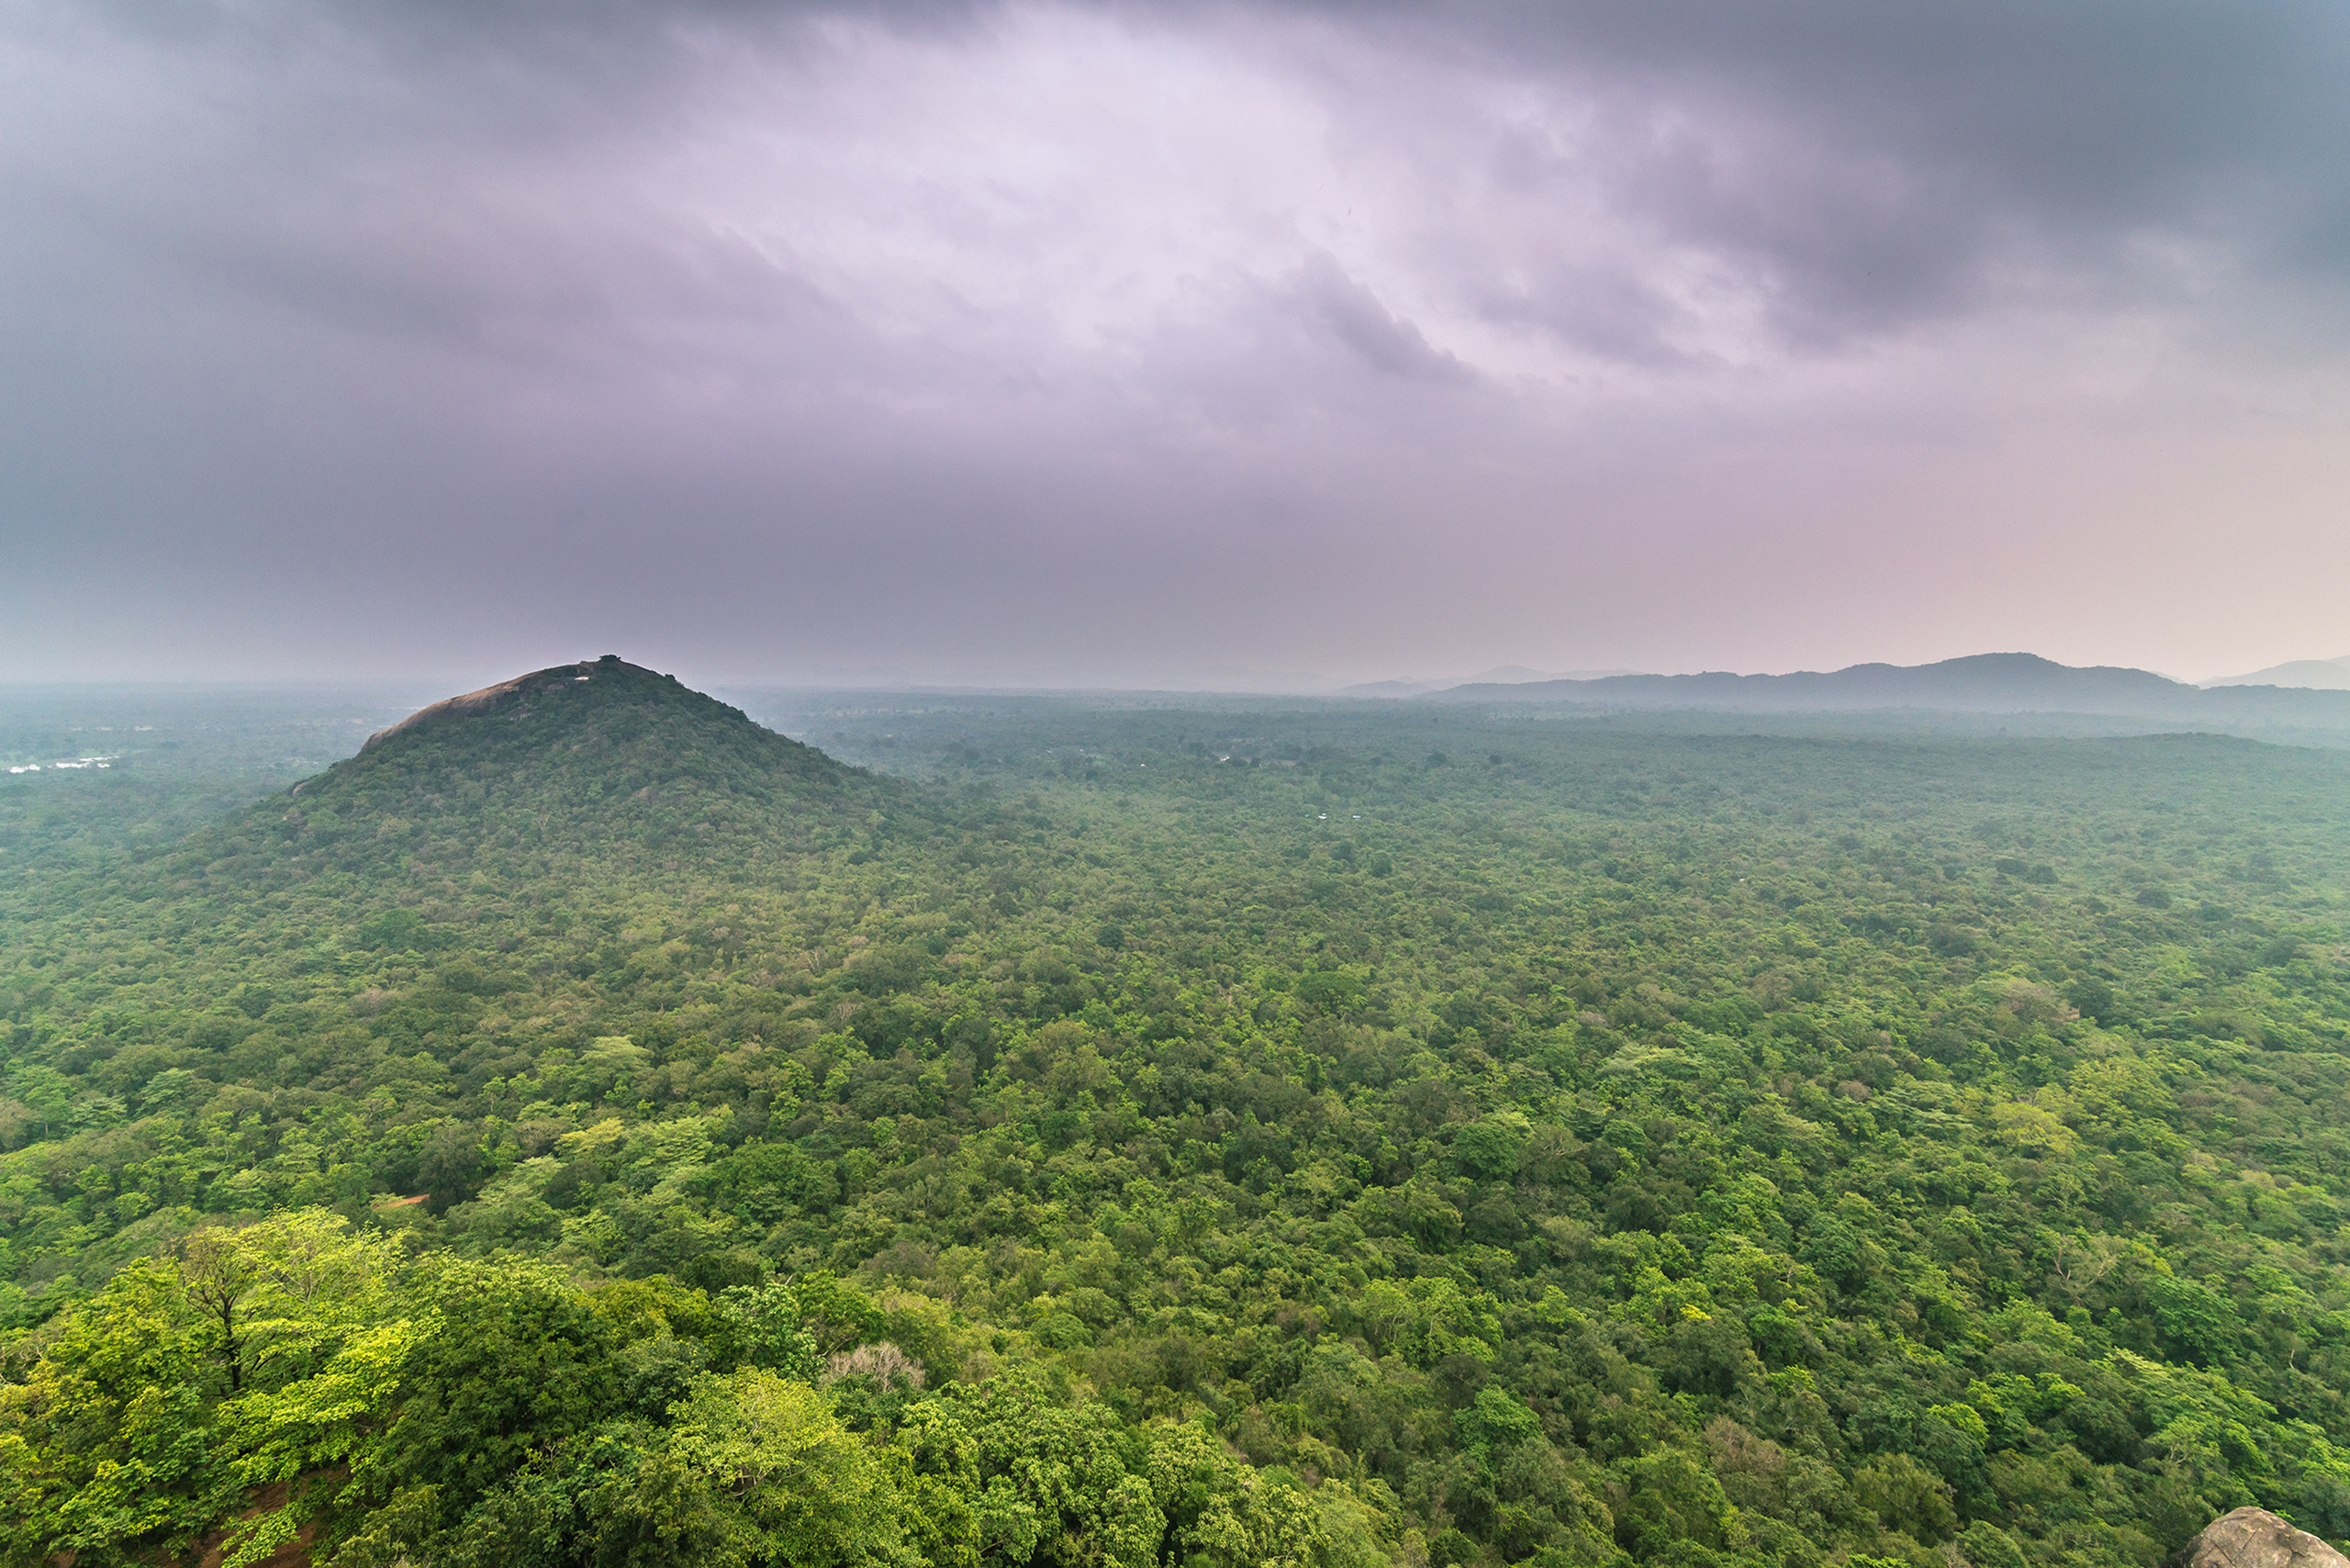 Dambulla in the Central Province, Sri Lanka. (Getty Images)